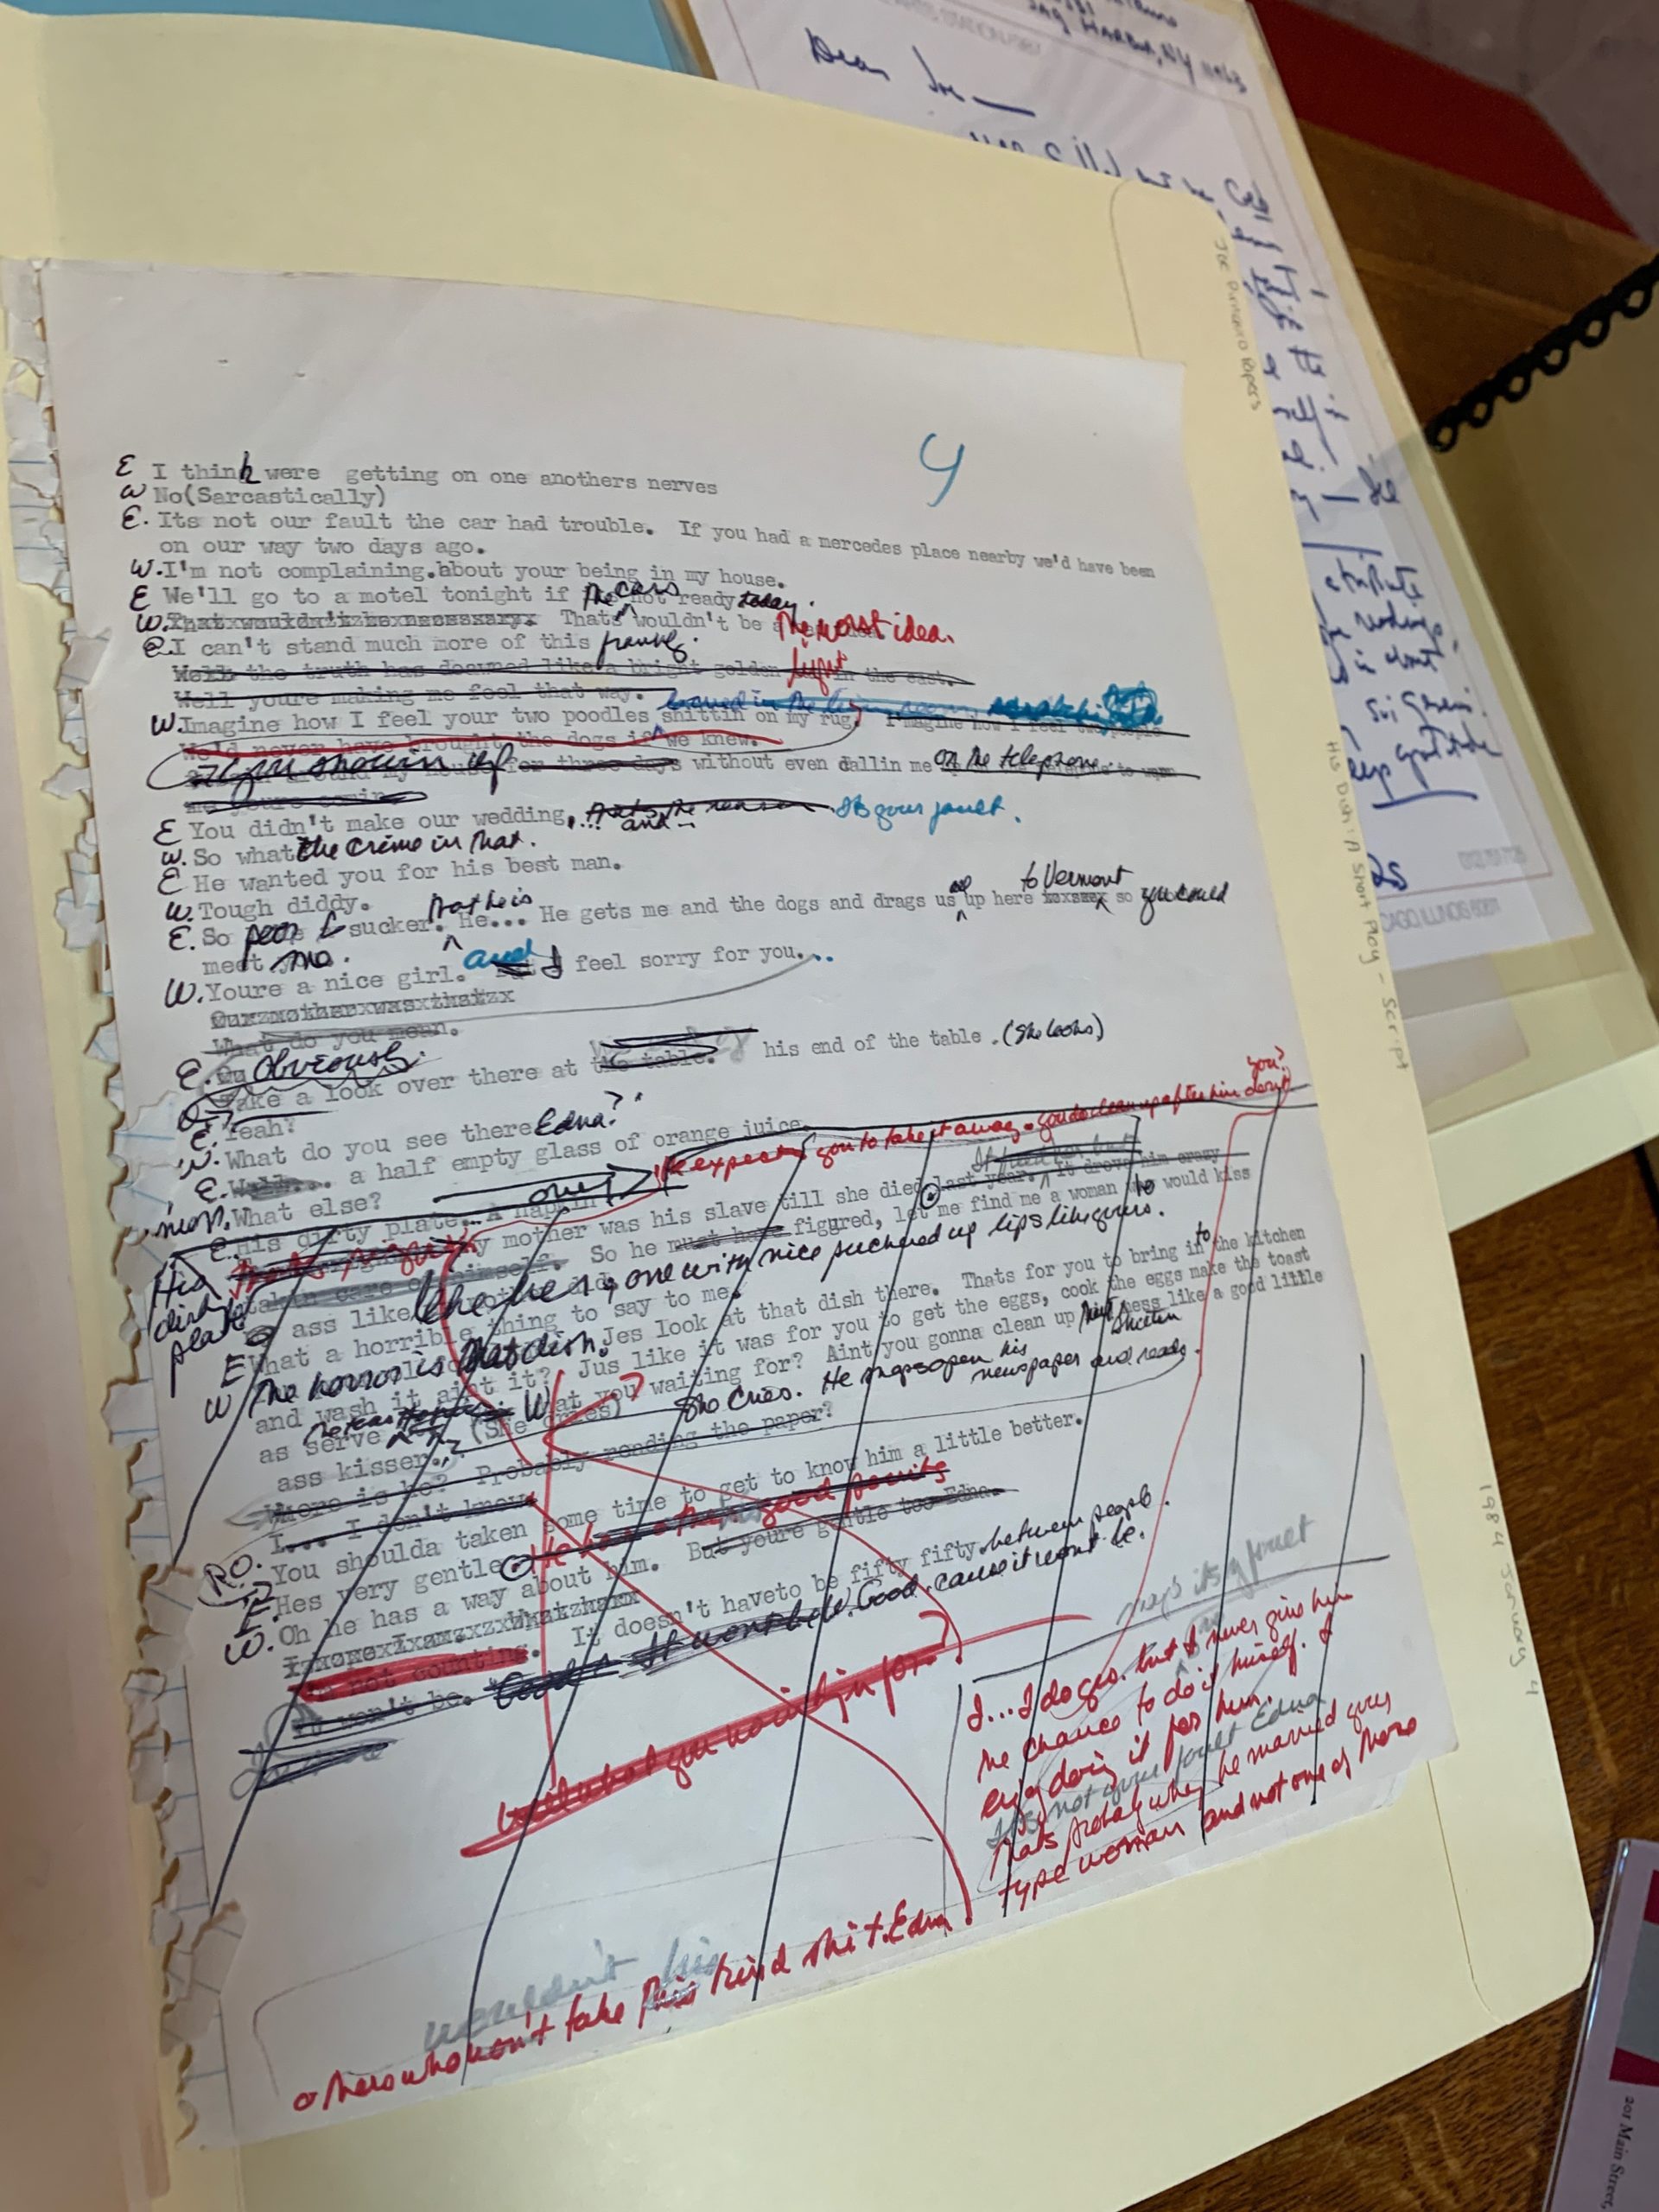 A manuscript page showing Joe Pintauro's handwritten edits and revisions.